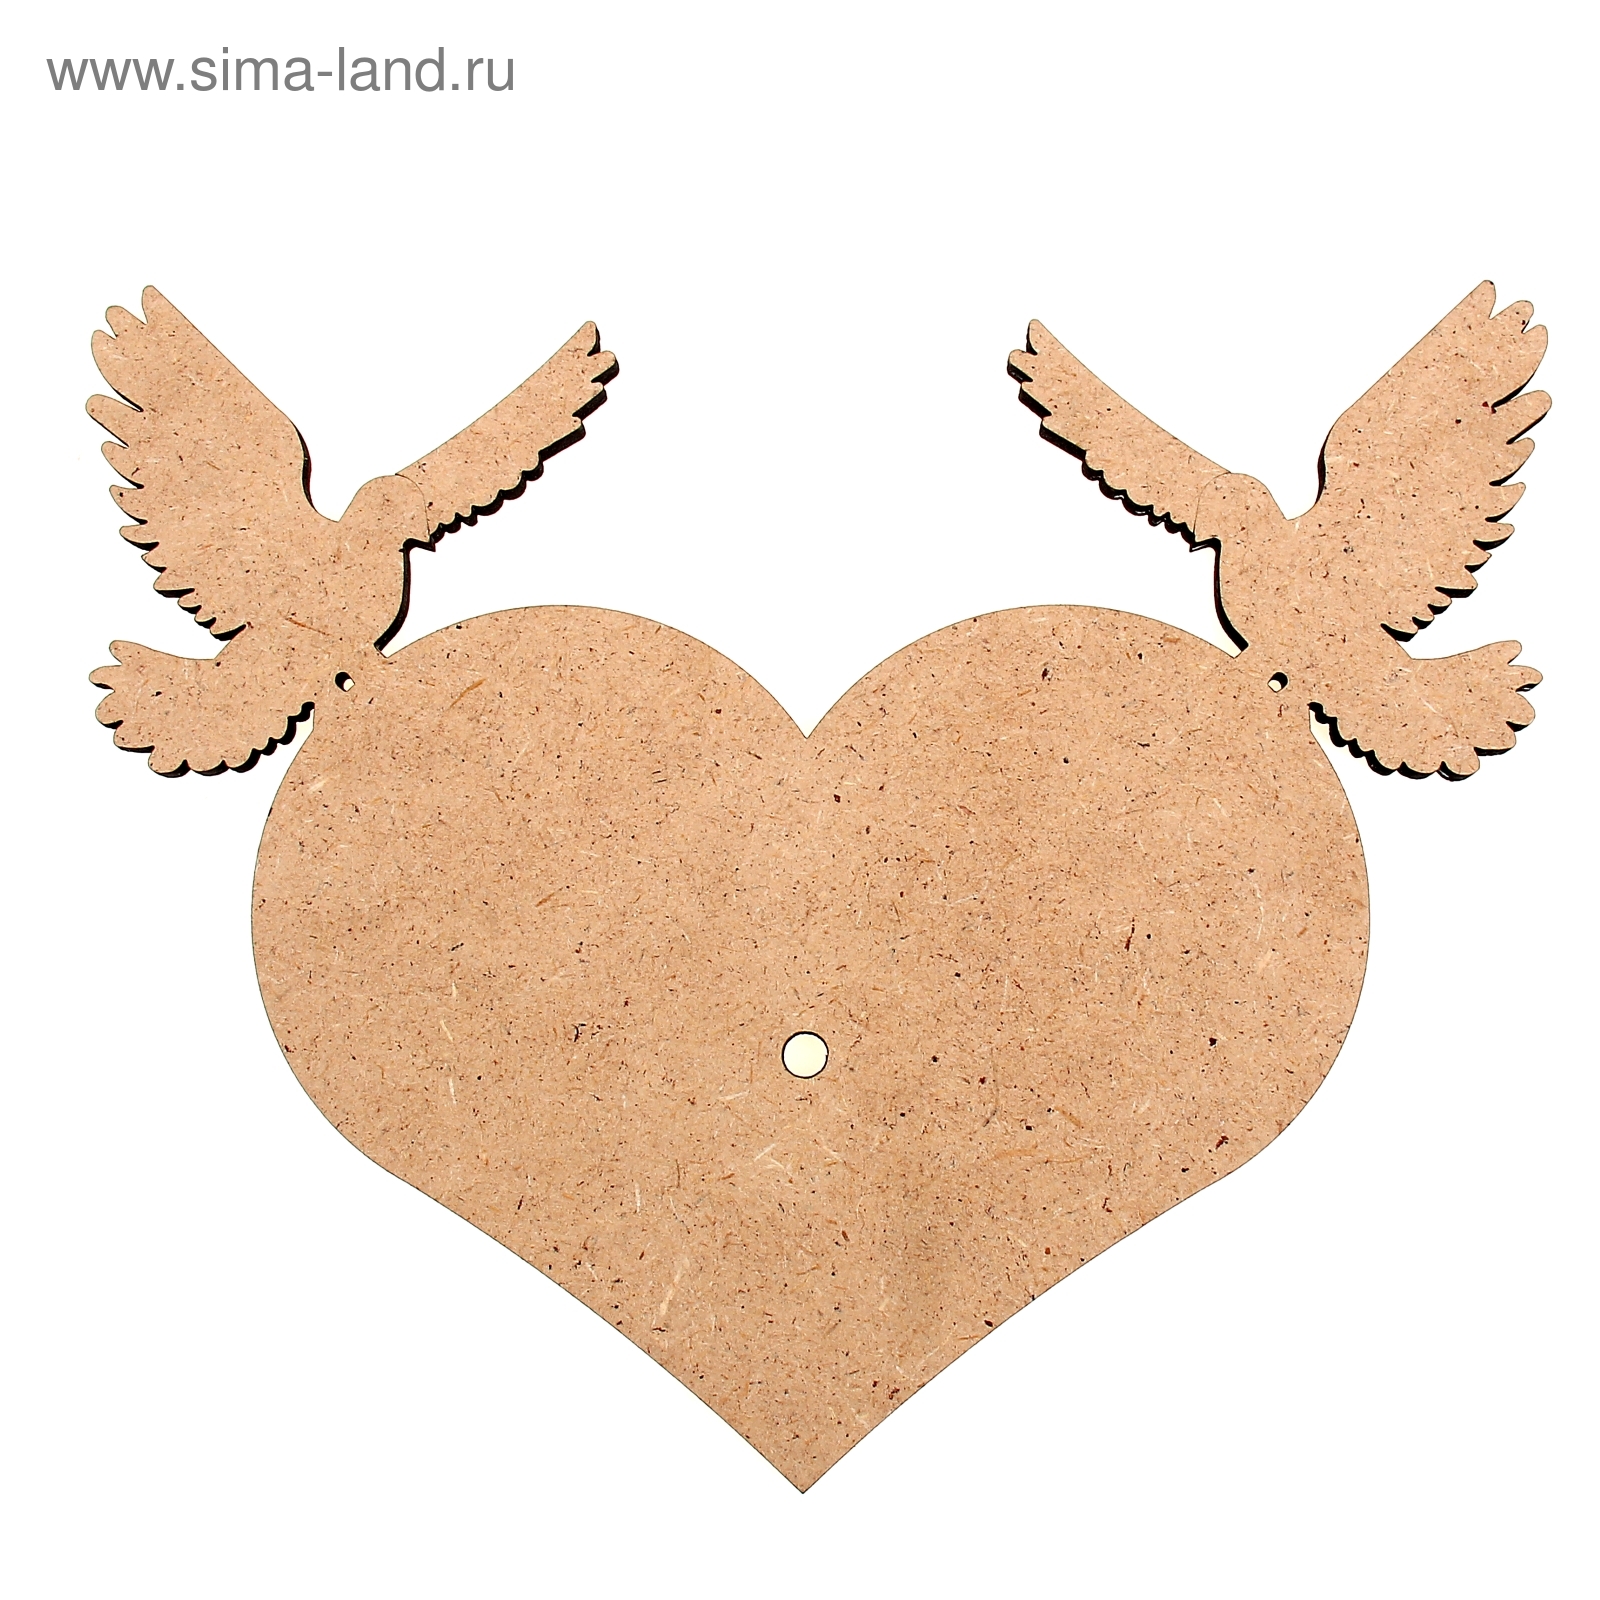 Заготовки из дерева сердечко с голубями